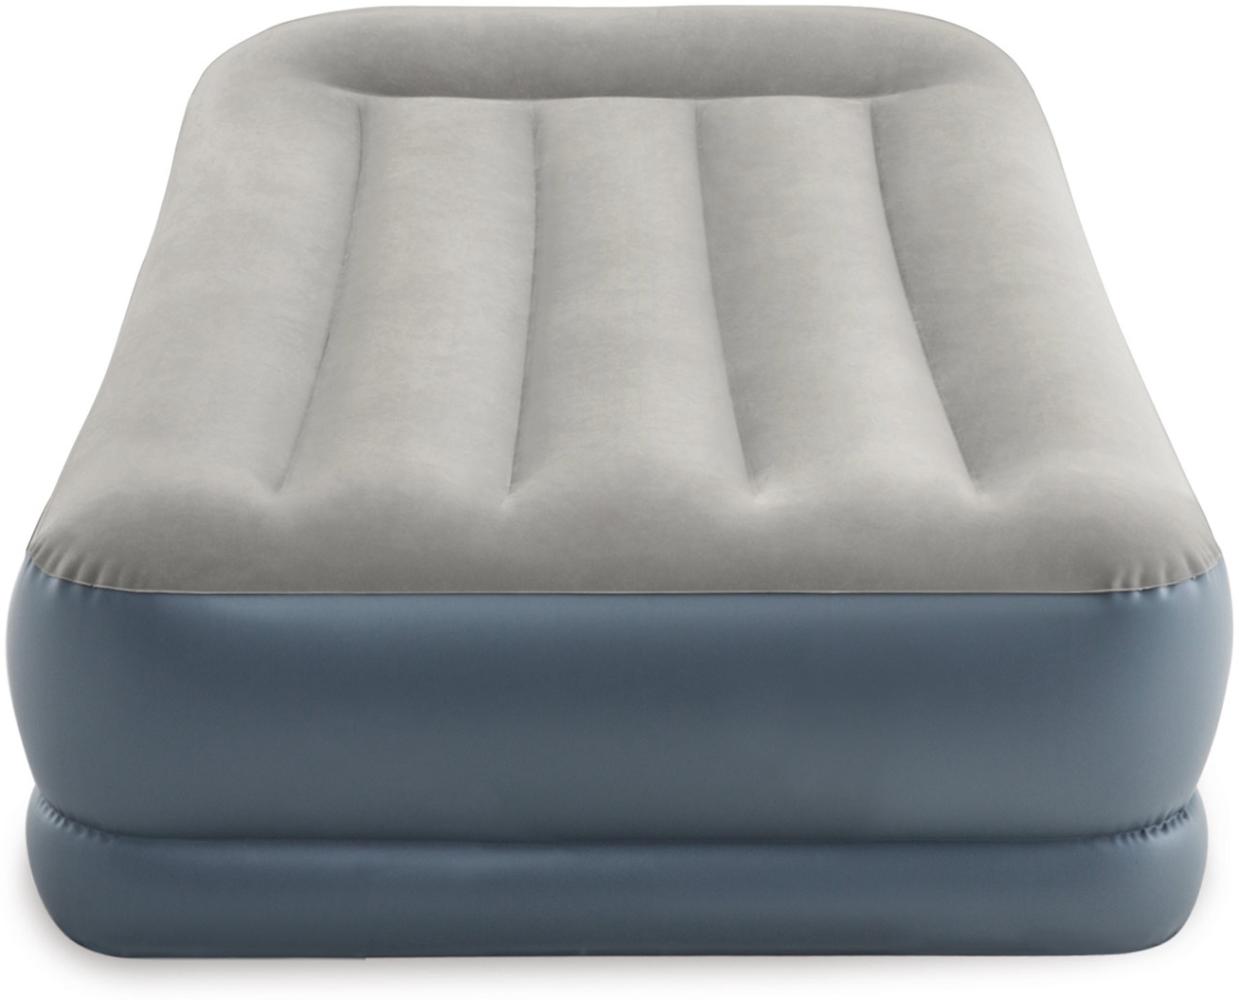 Intex 'Pillow Rest Raised' Single-Luftbett, inkl. Tragetasche, mit integrierter Pumpe, grau Bild 1